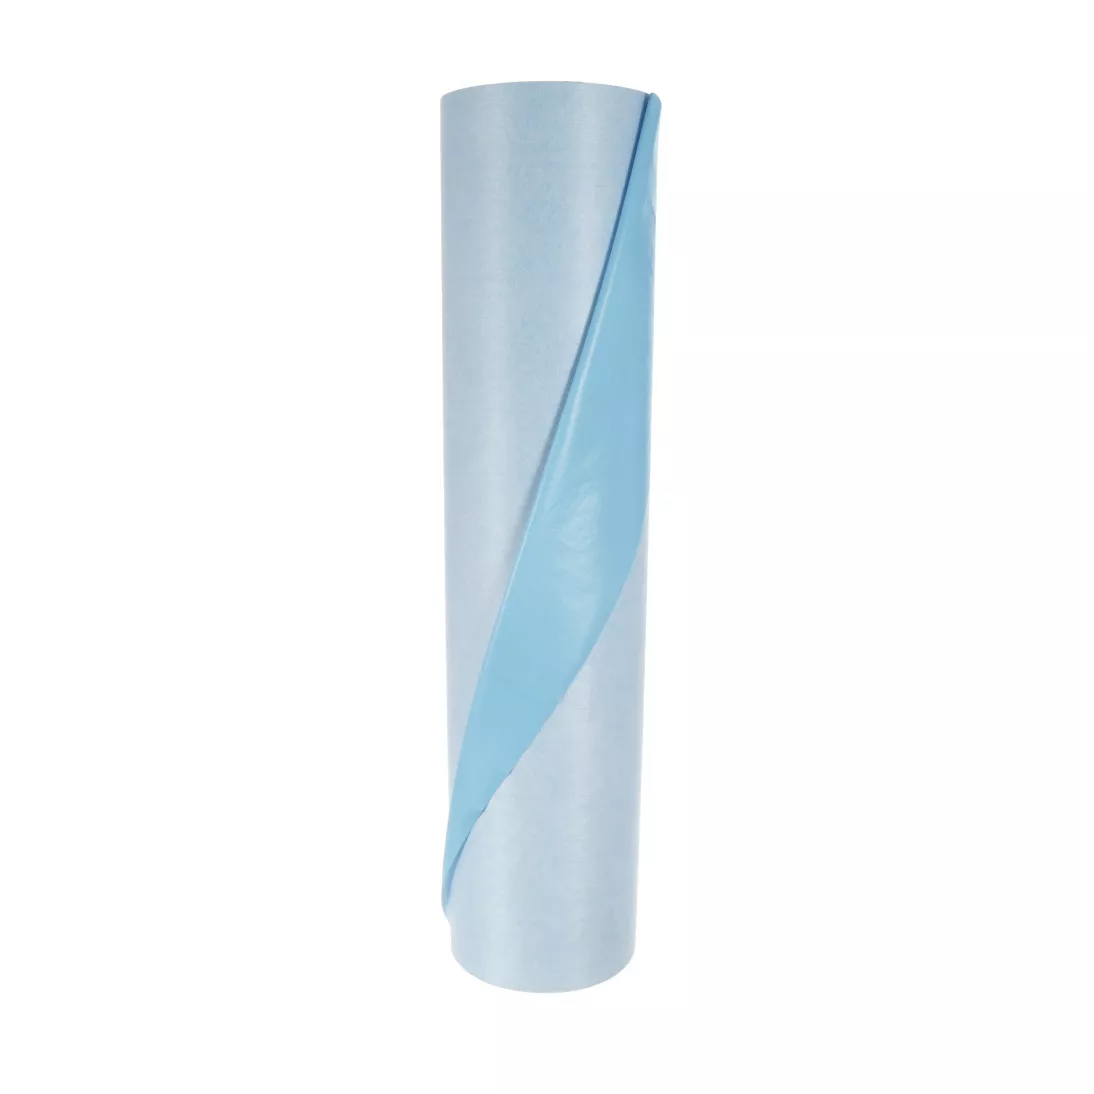 3M™ Self-Stick Liquid Protection Fabric, 36880, Blue, 36 in x 300 ft, 1
roll per case